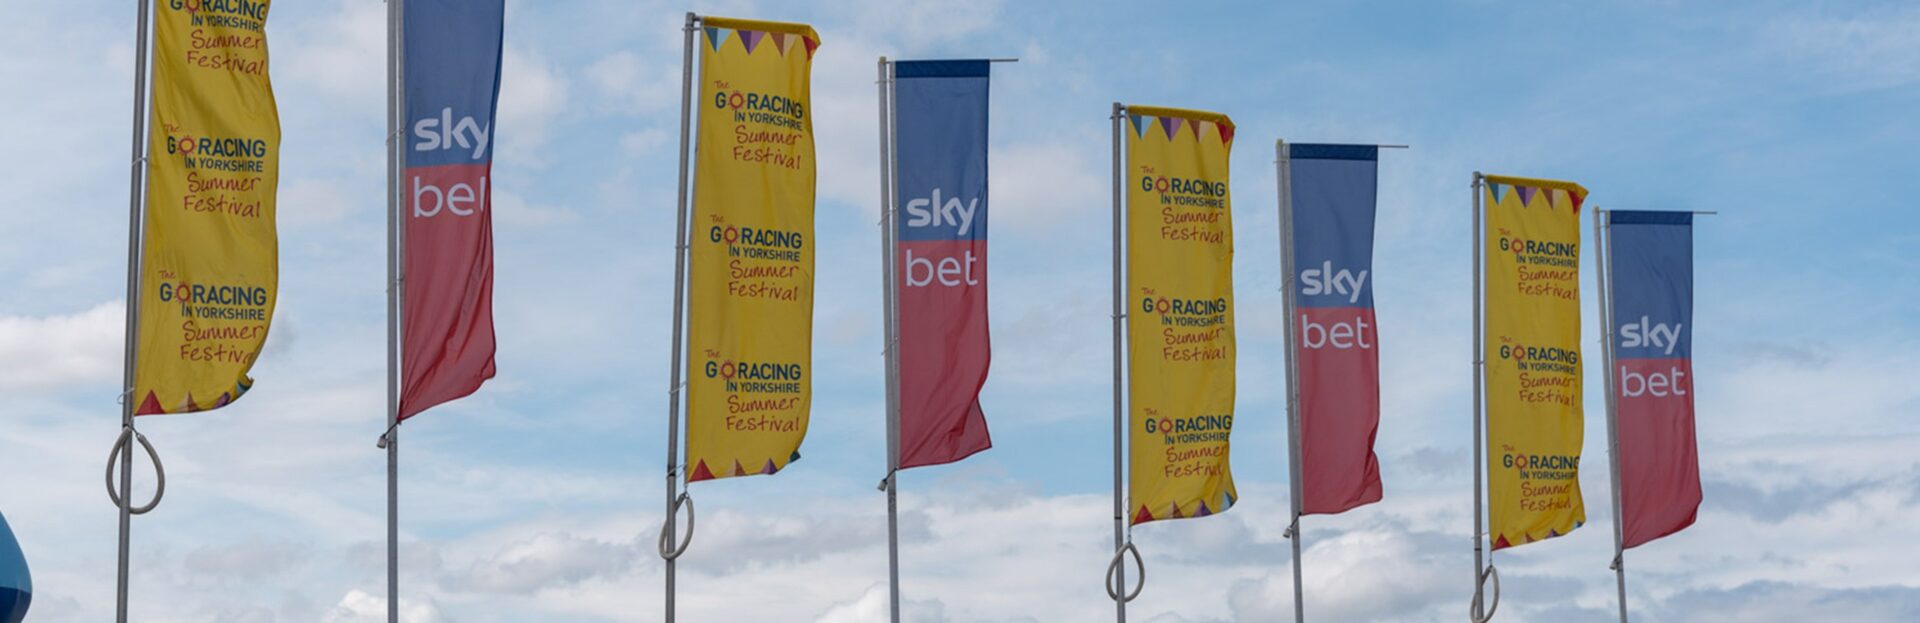 Sky Bet Banner